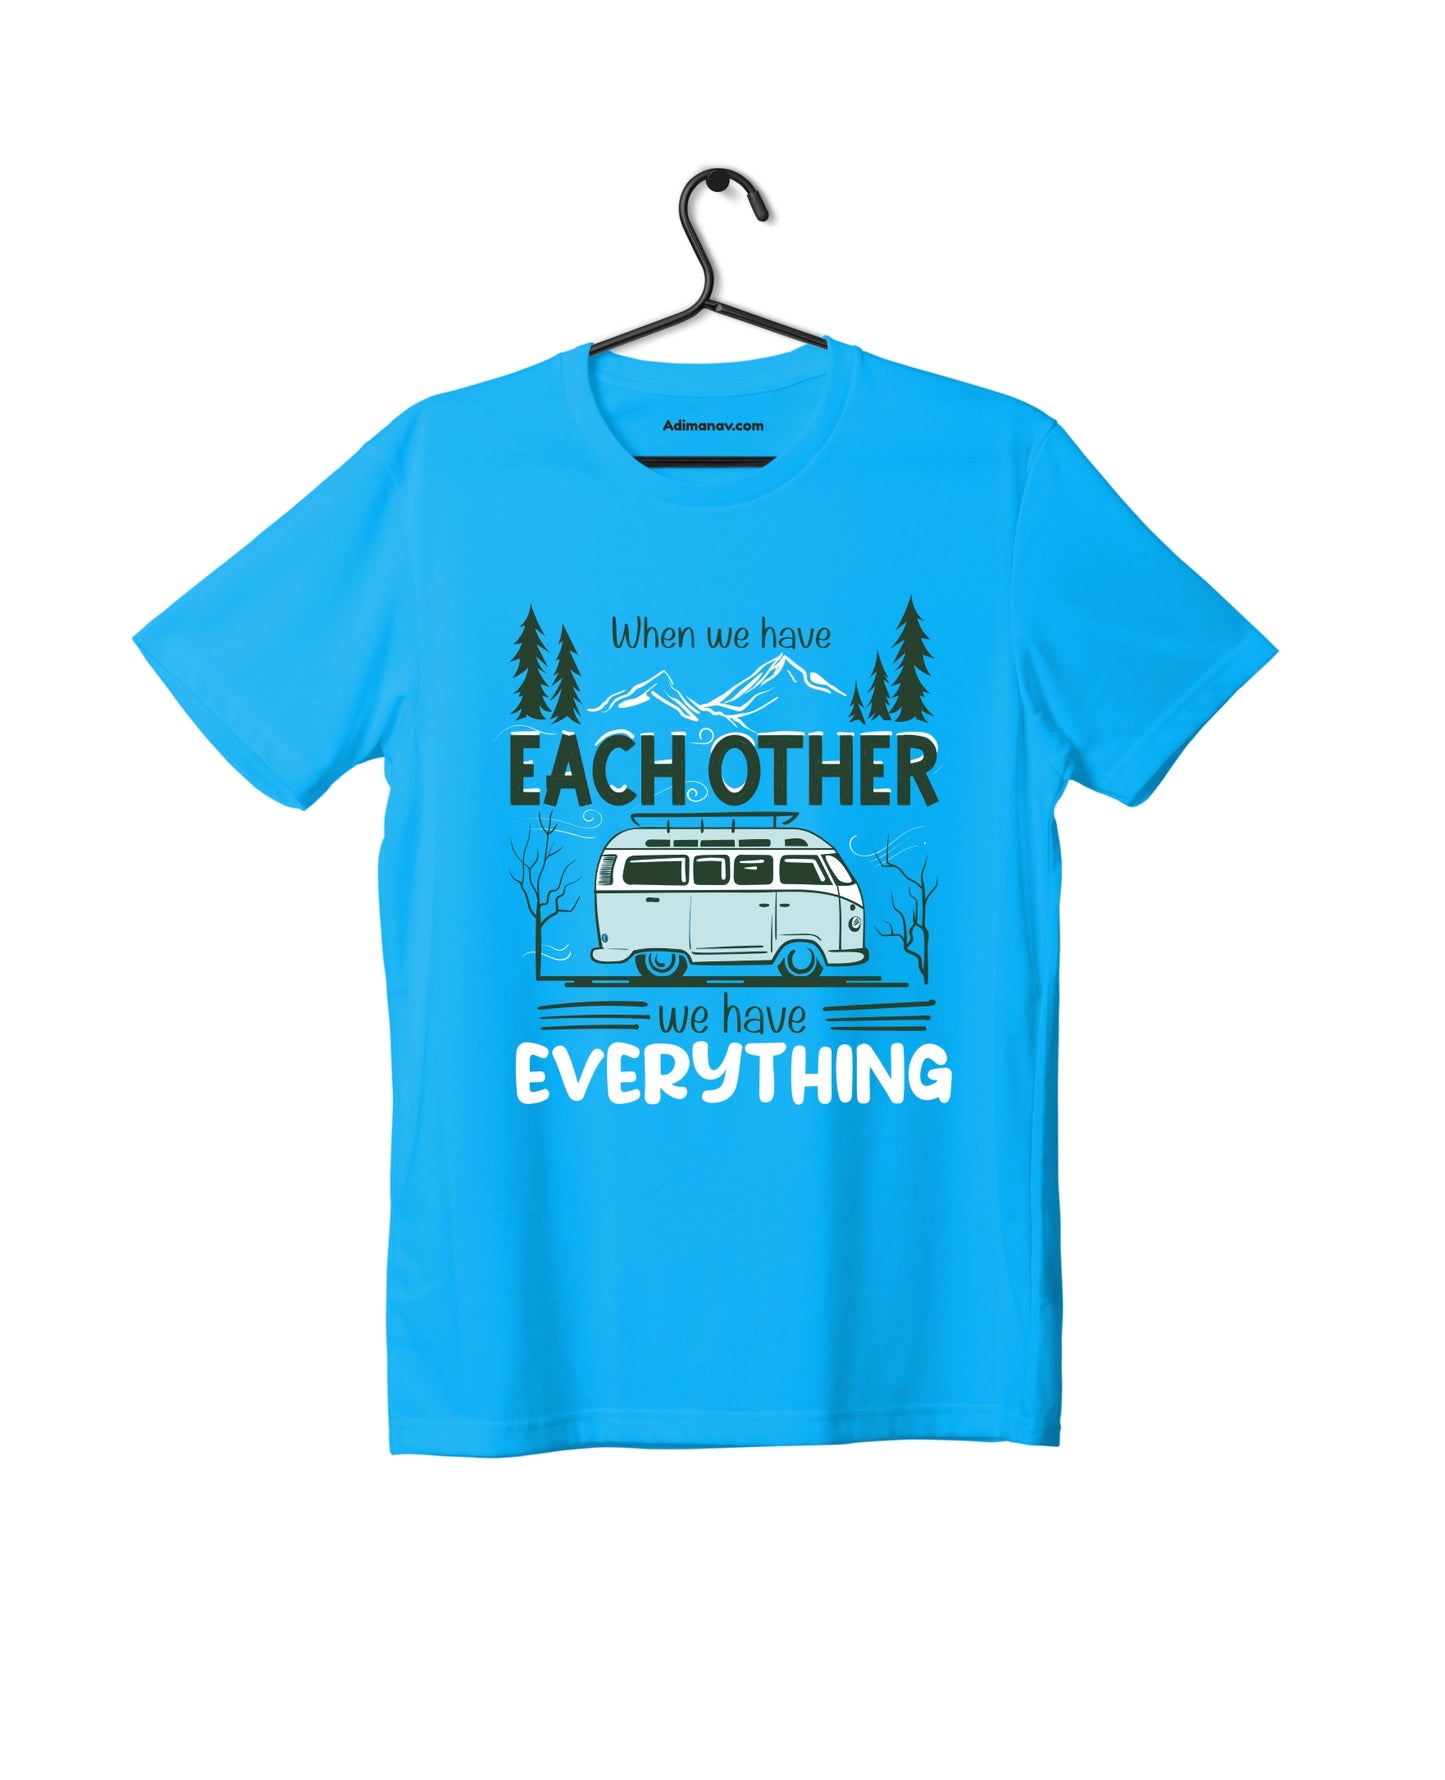 Family is Everything - Light Blue - Unisex Kids T-shirt